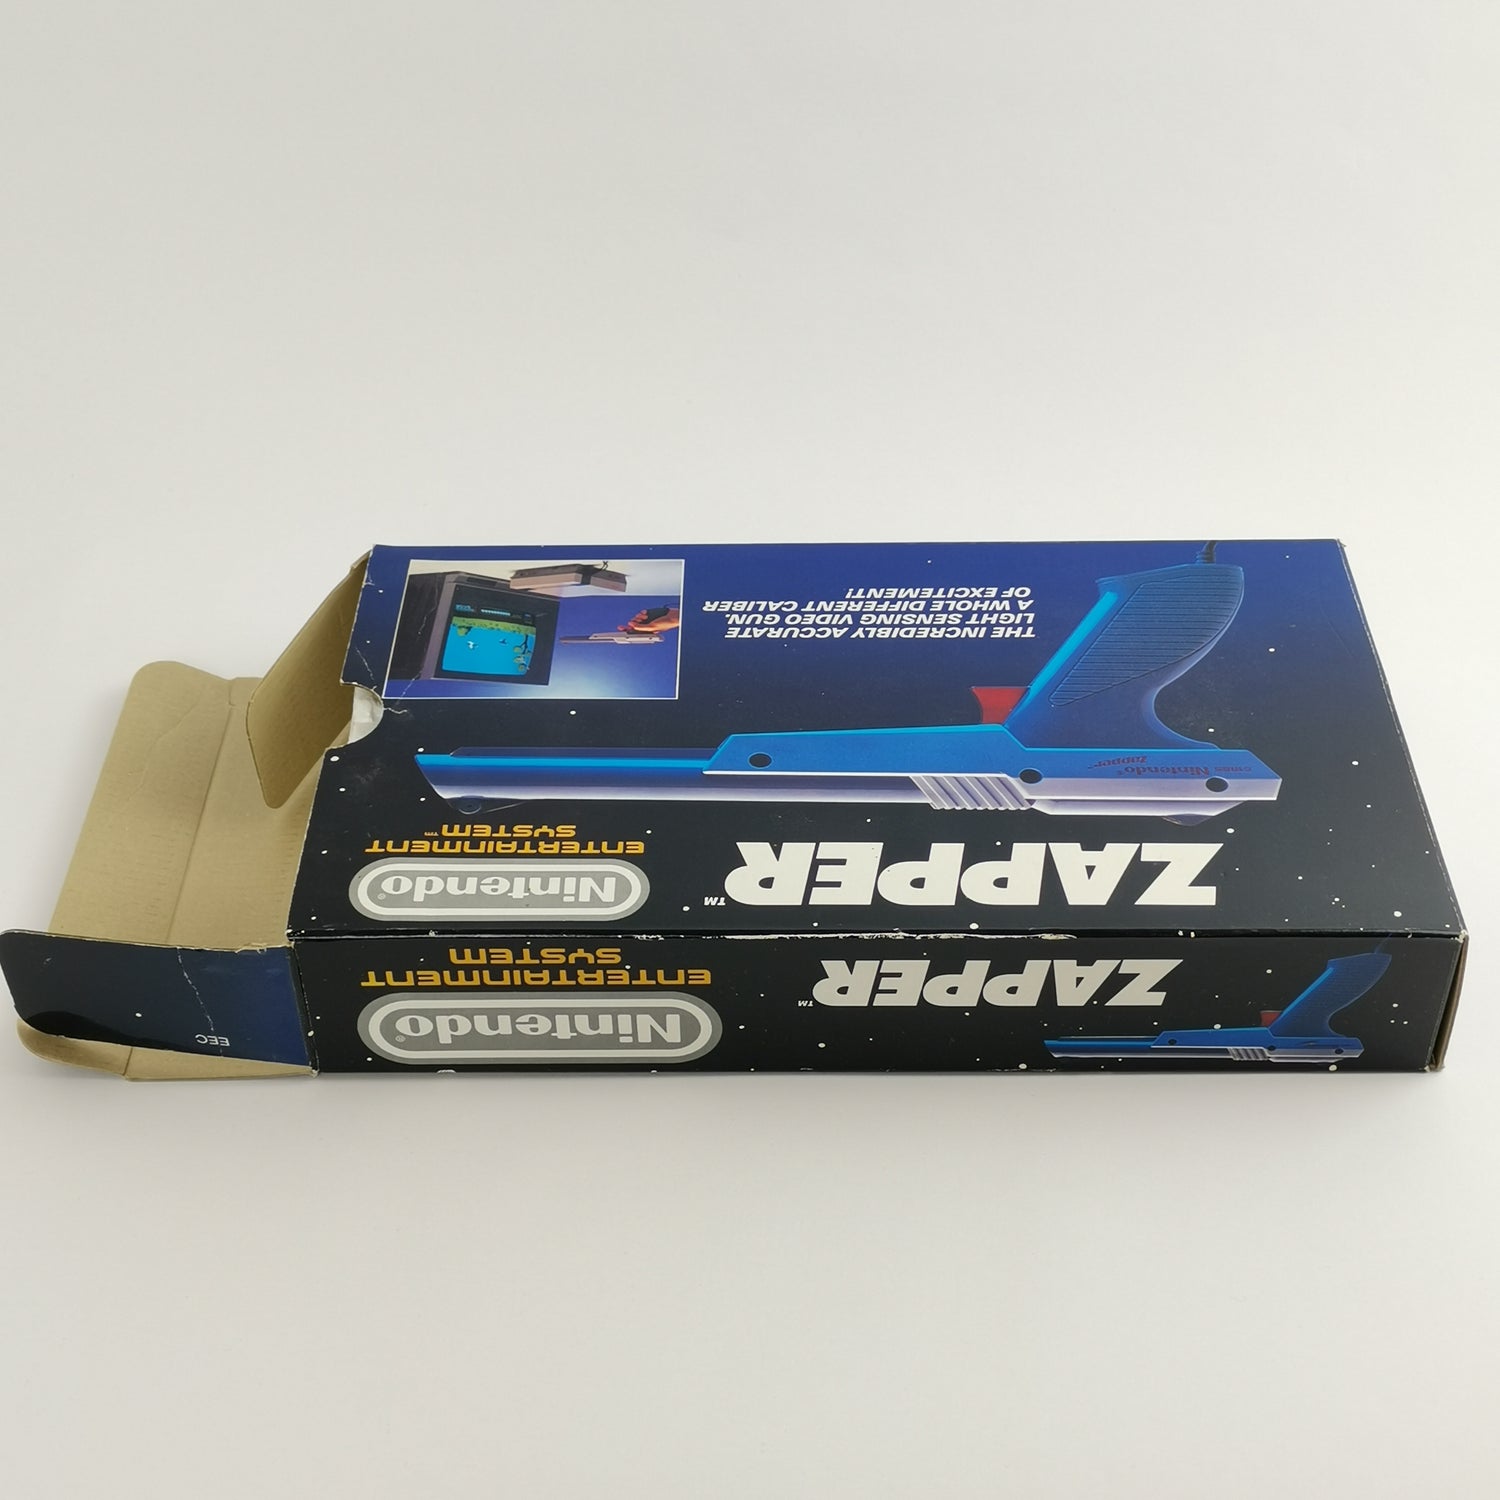 Nintendo Entertainment System Controller : Zapper Grau in OVP | NES Gun Gamepad